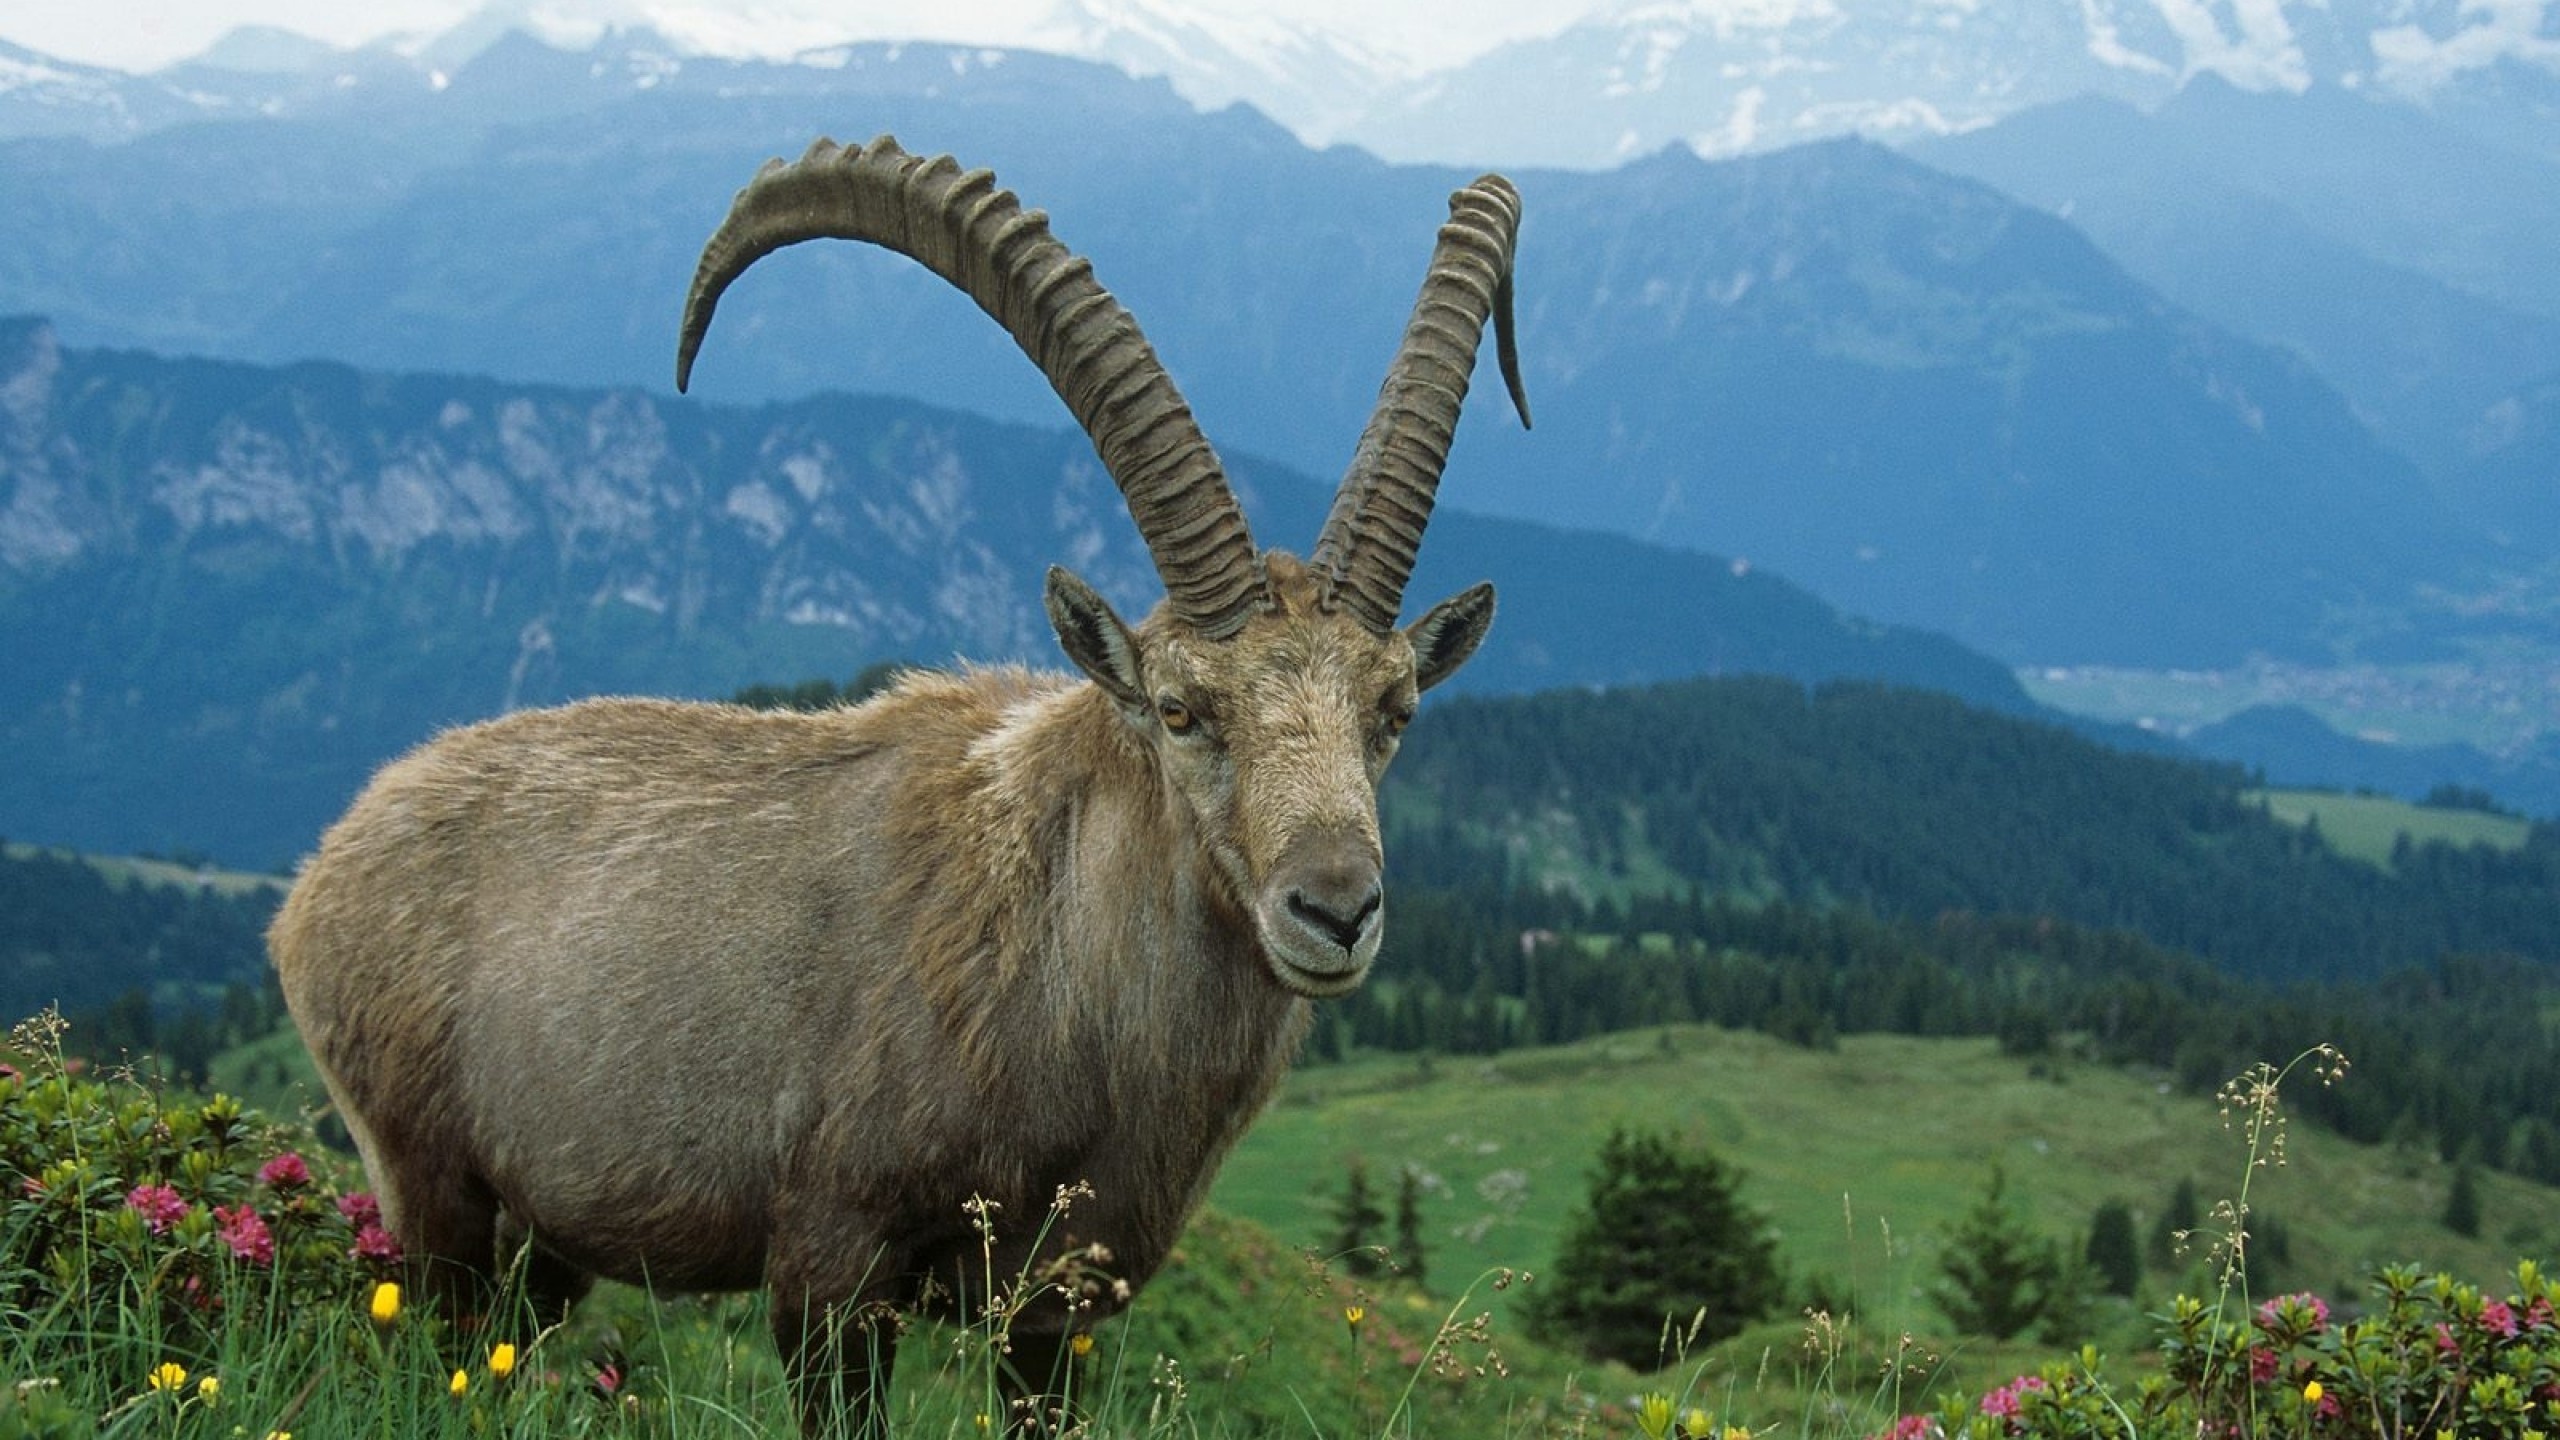 Mountain goat, Majestic creature, breathtaking view, Nature's beauty, 2560x1440 HD Desktop